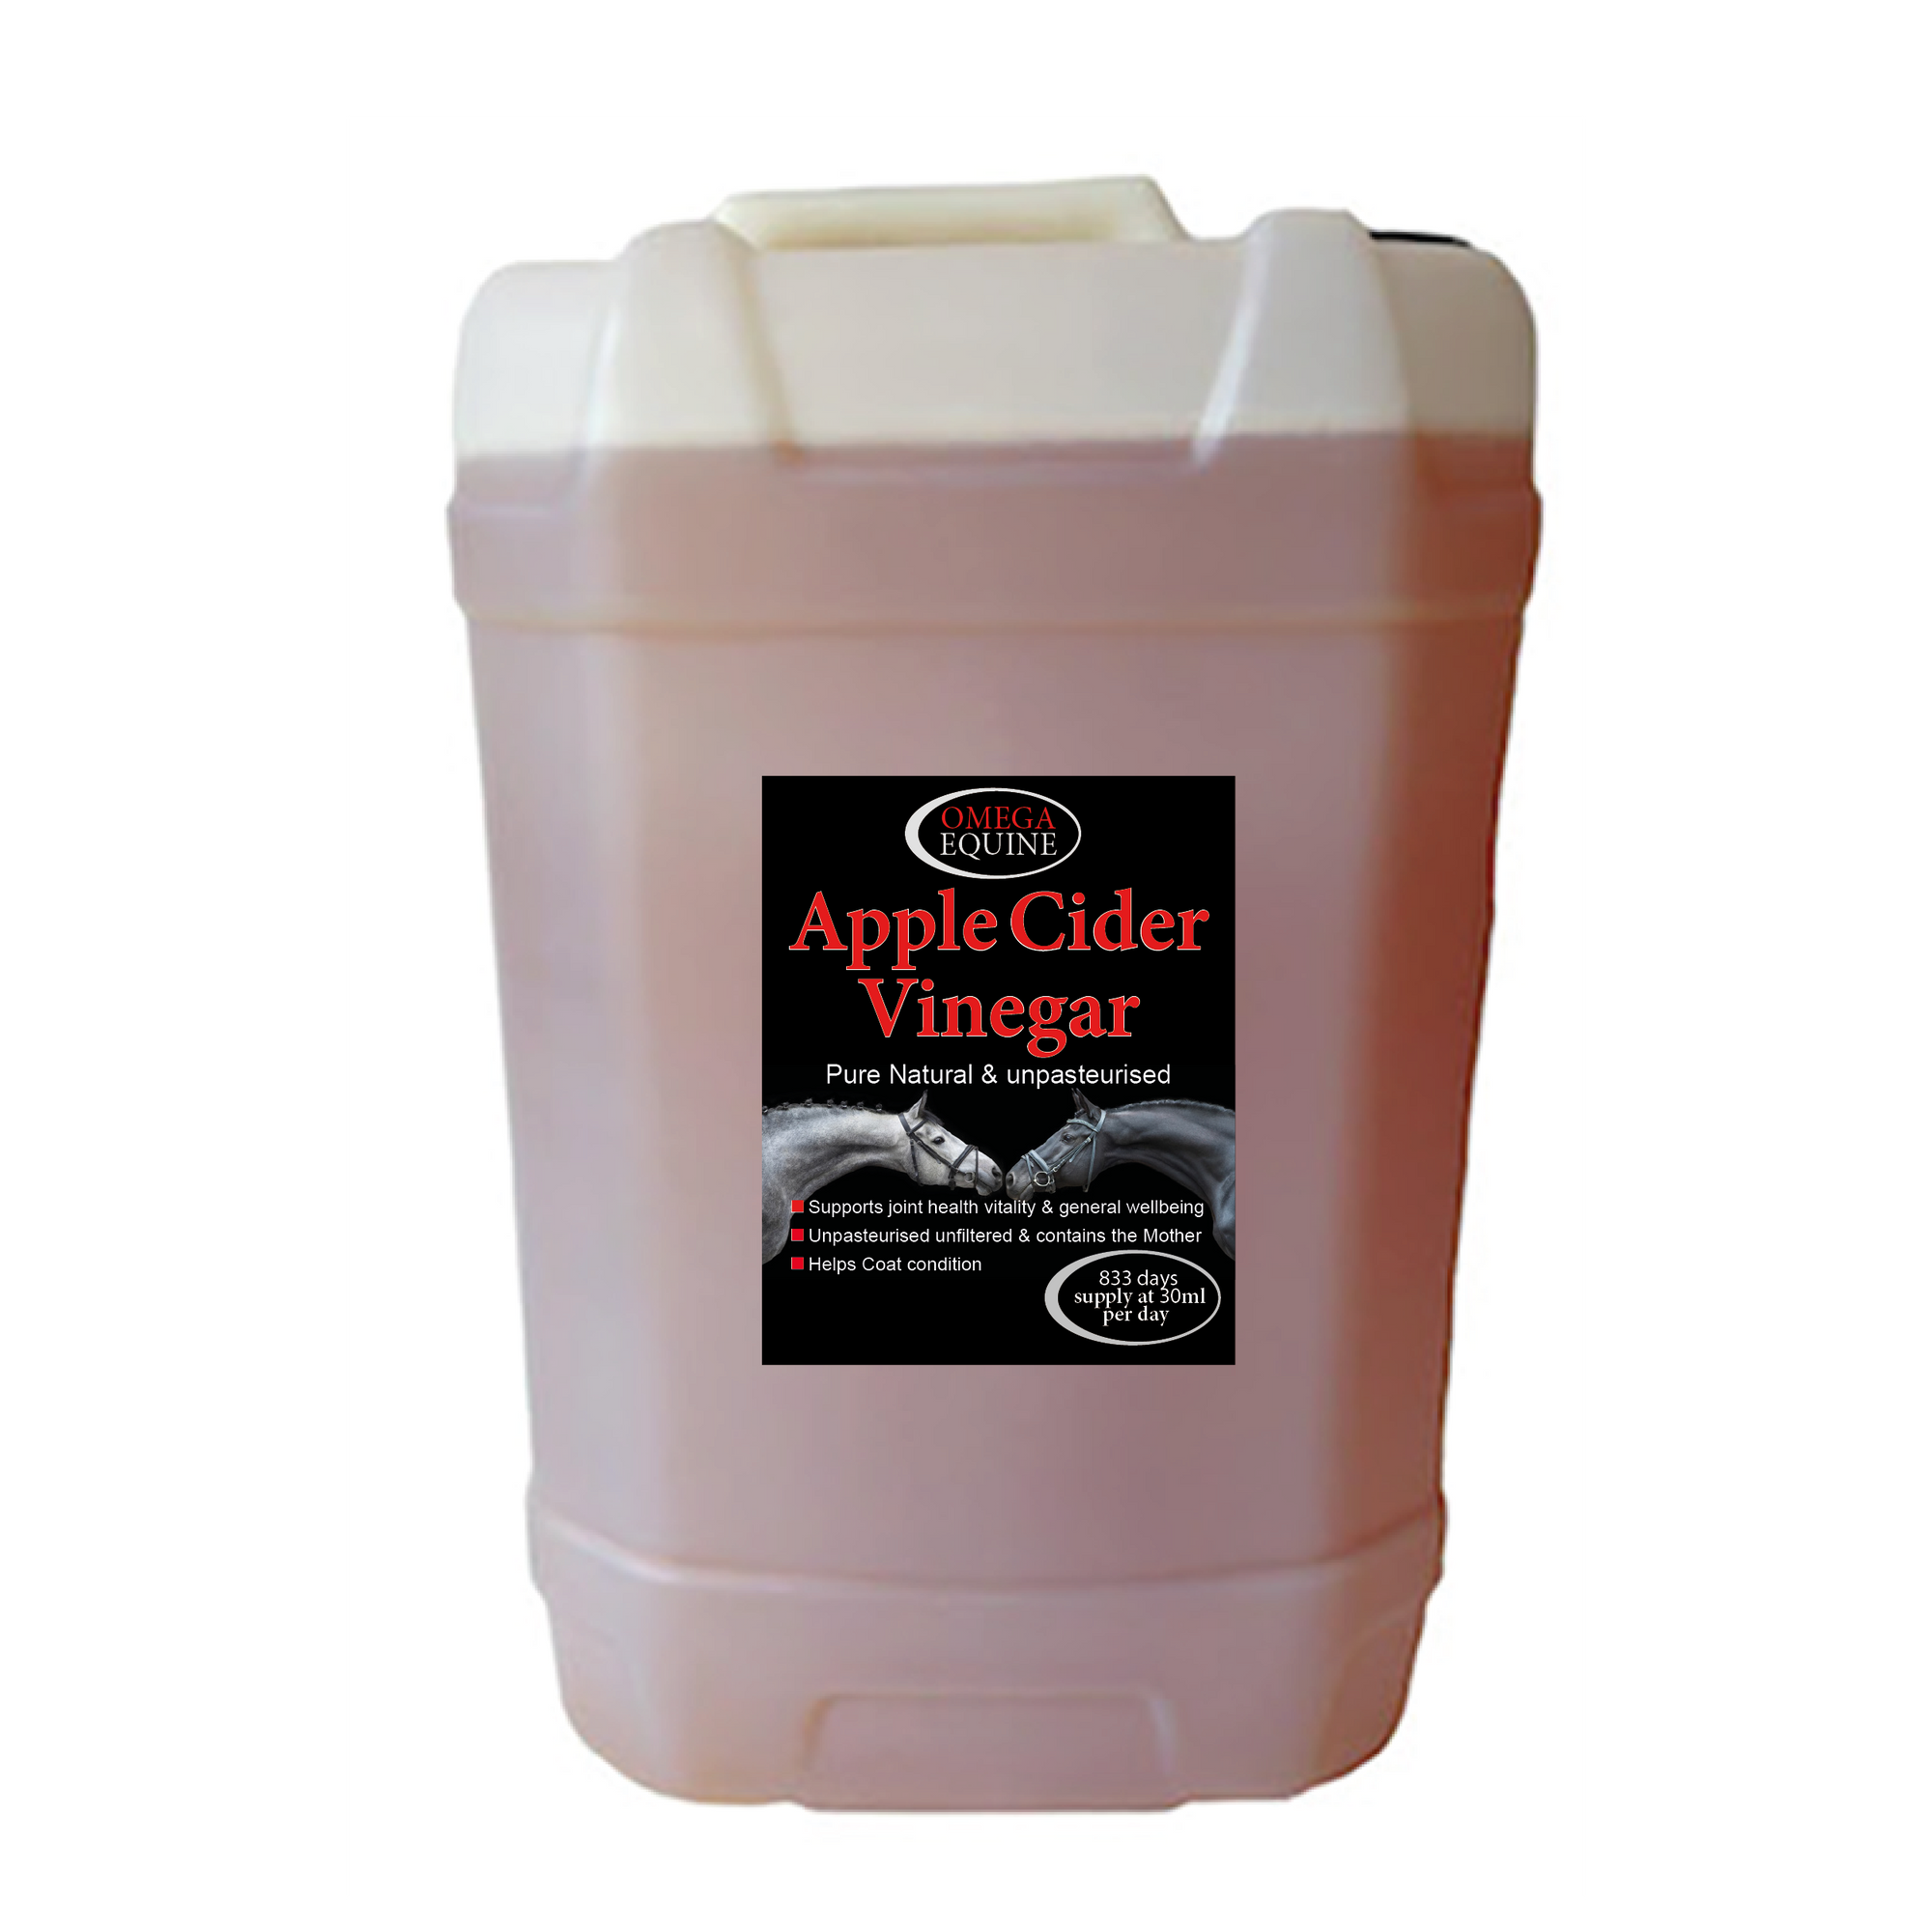 Omega Apple Cider Vinegar